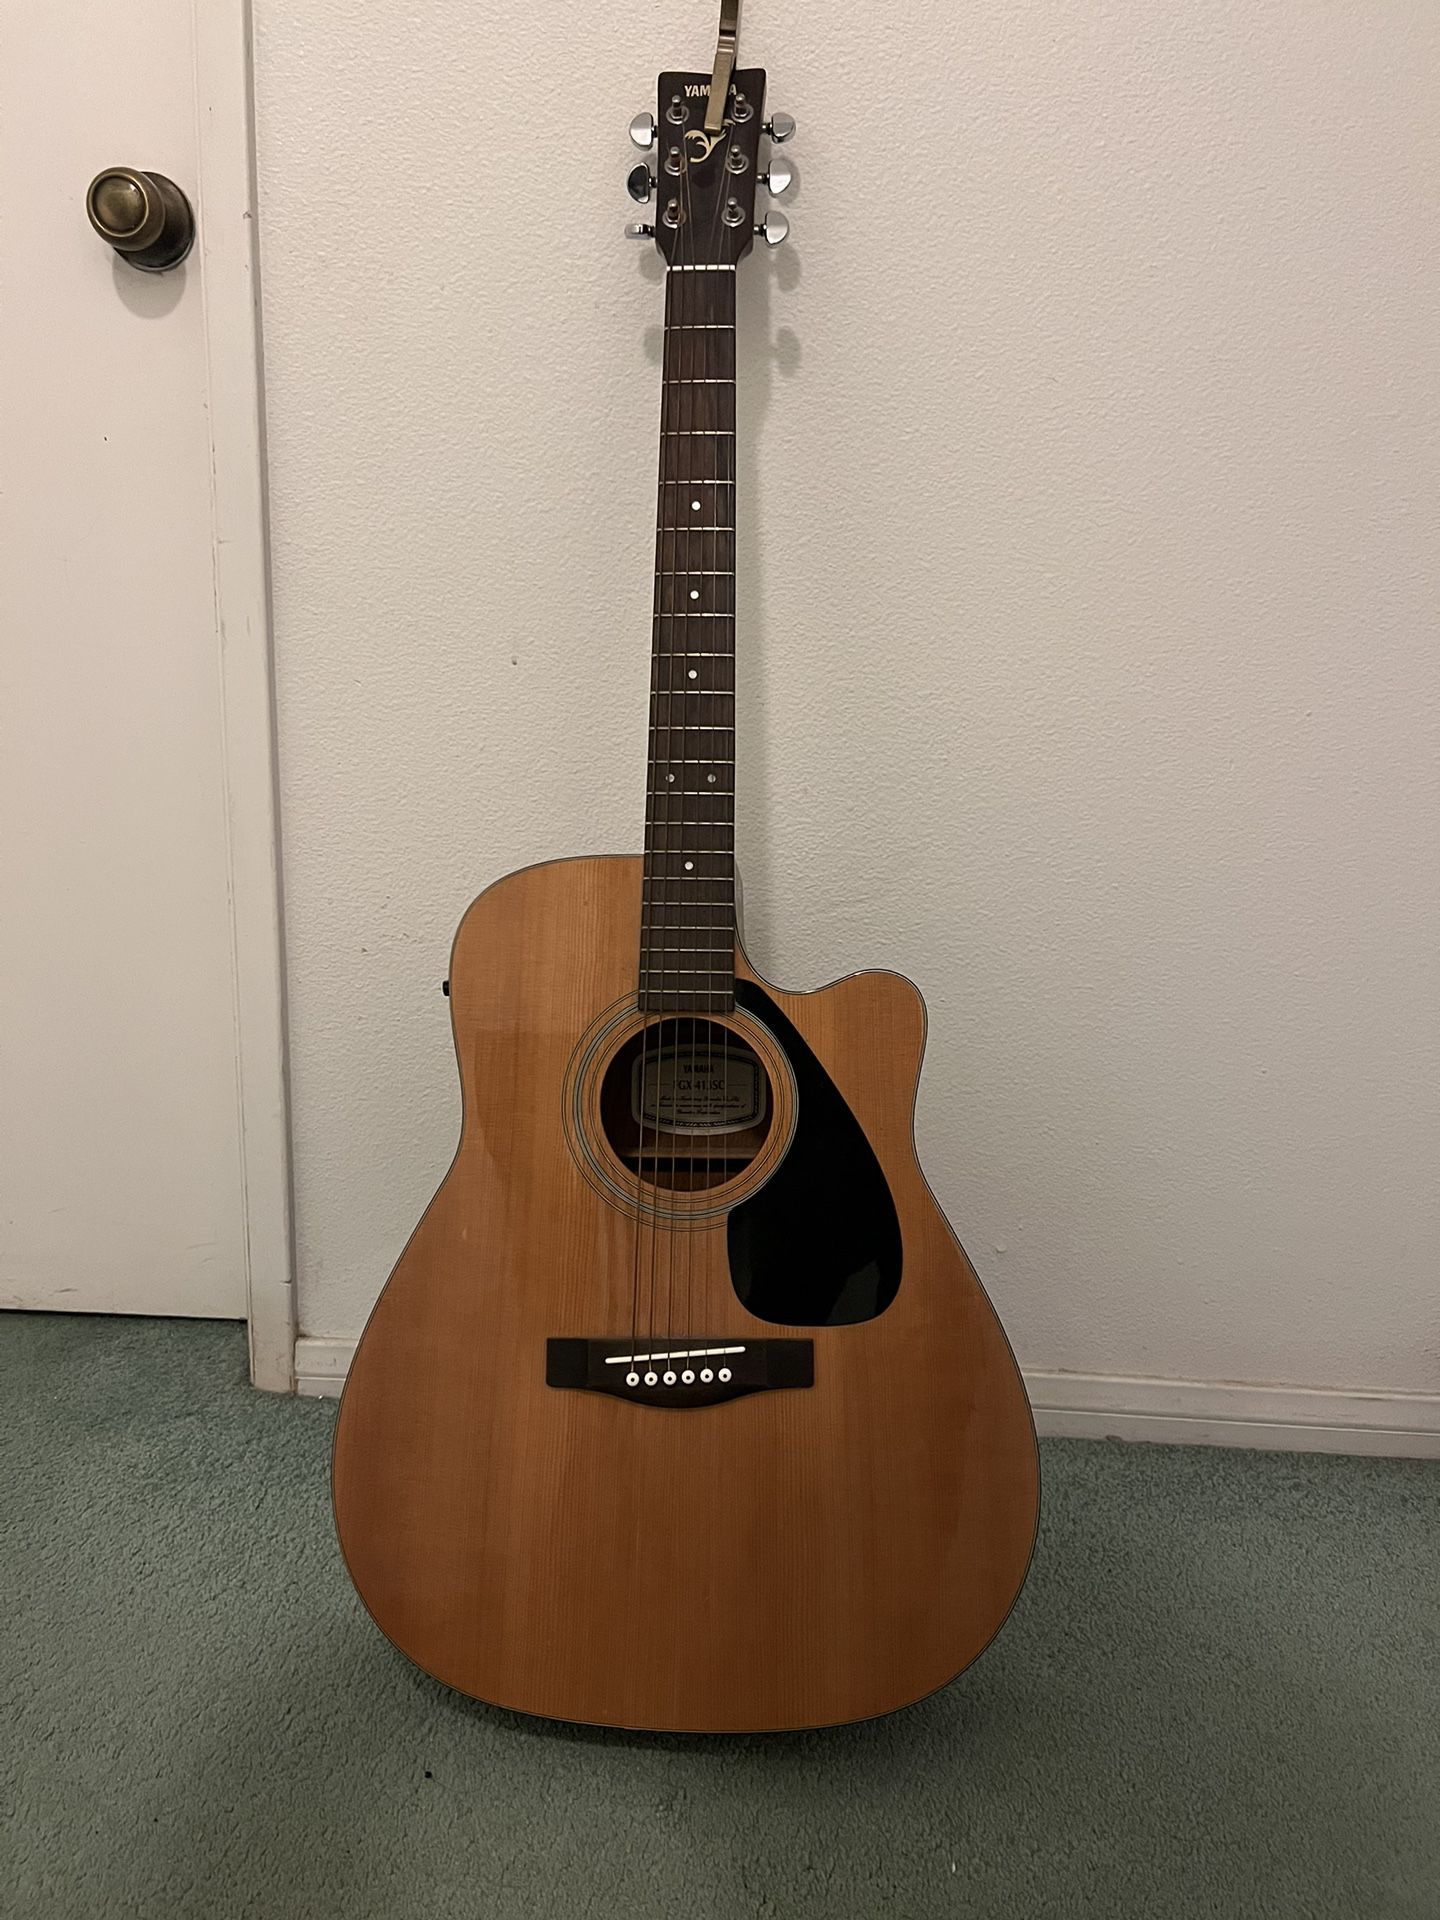 Yamaha Guitar with Capo